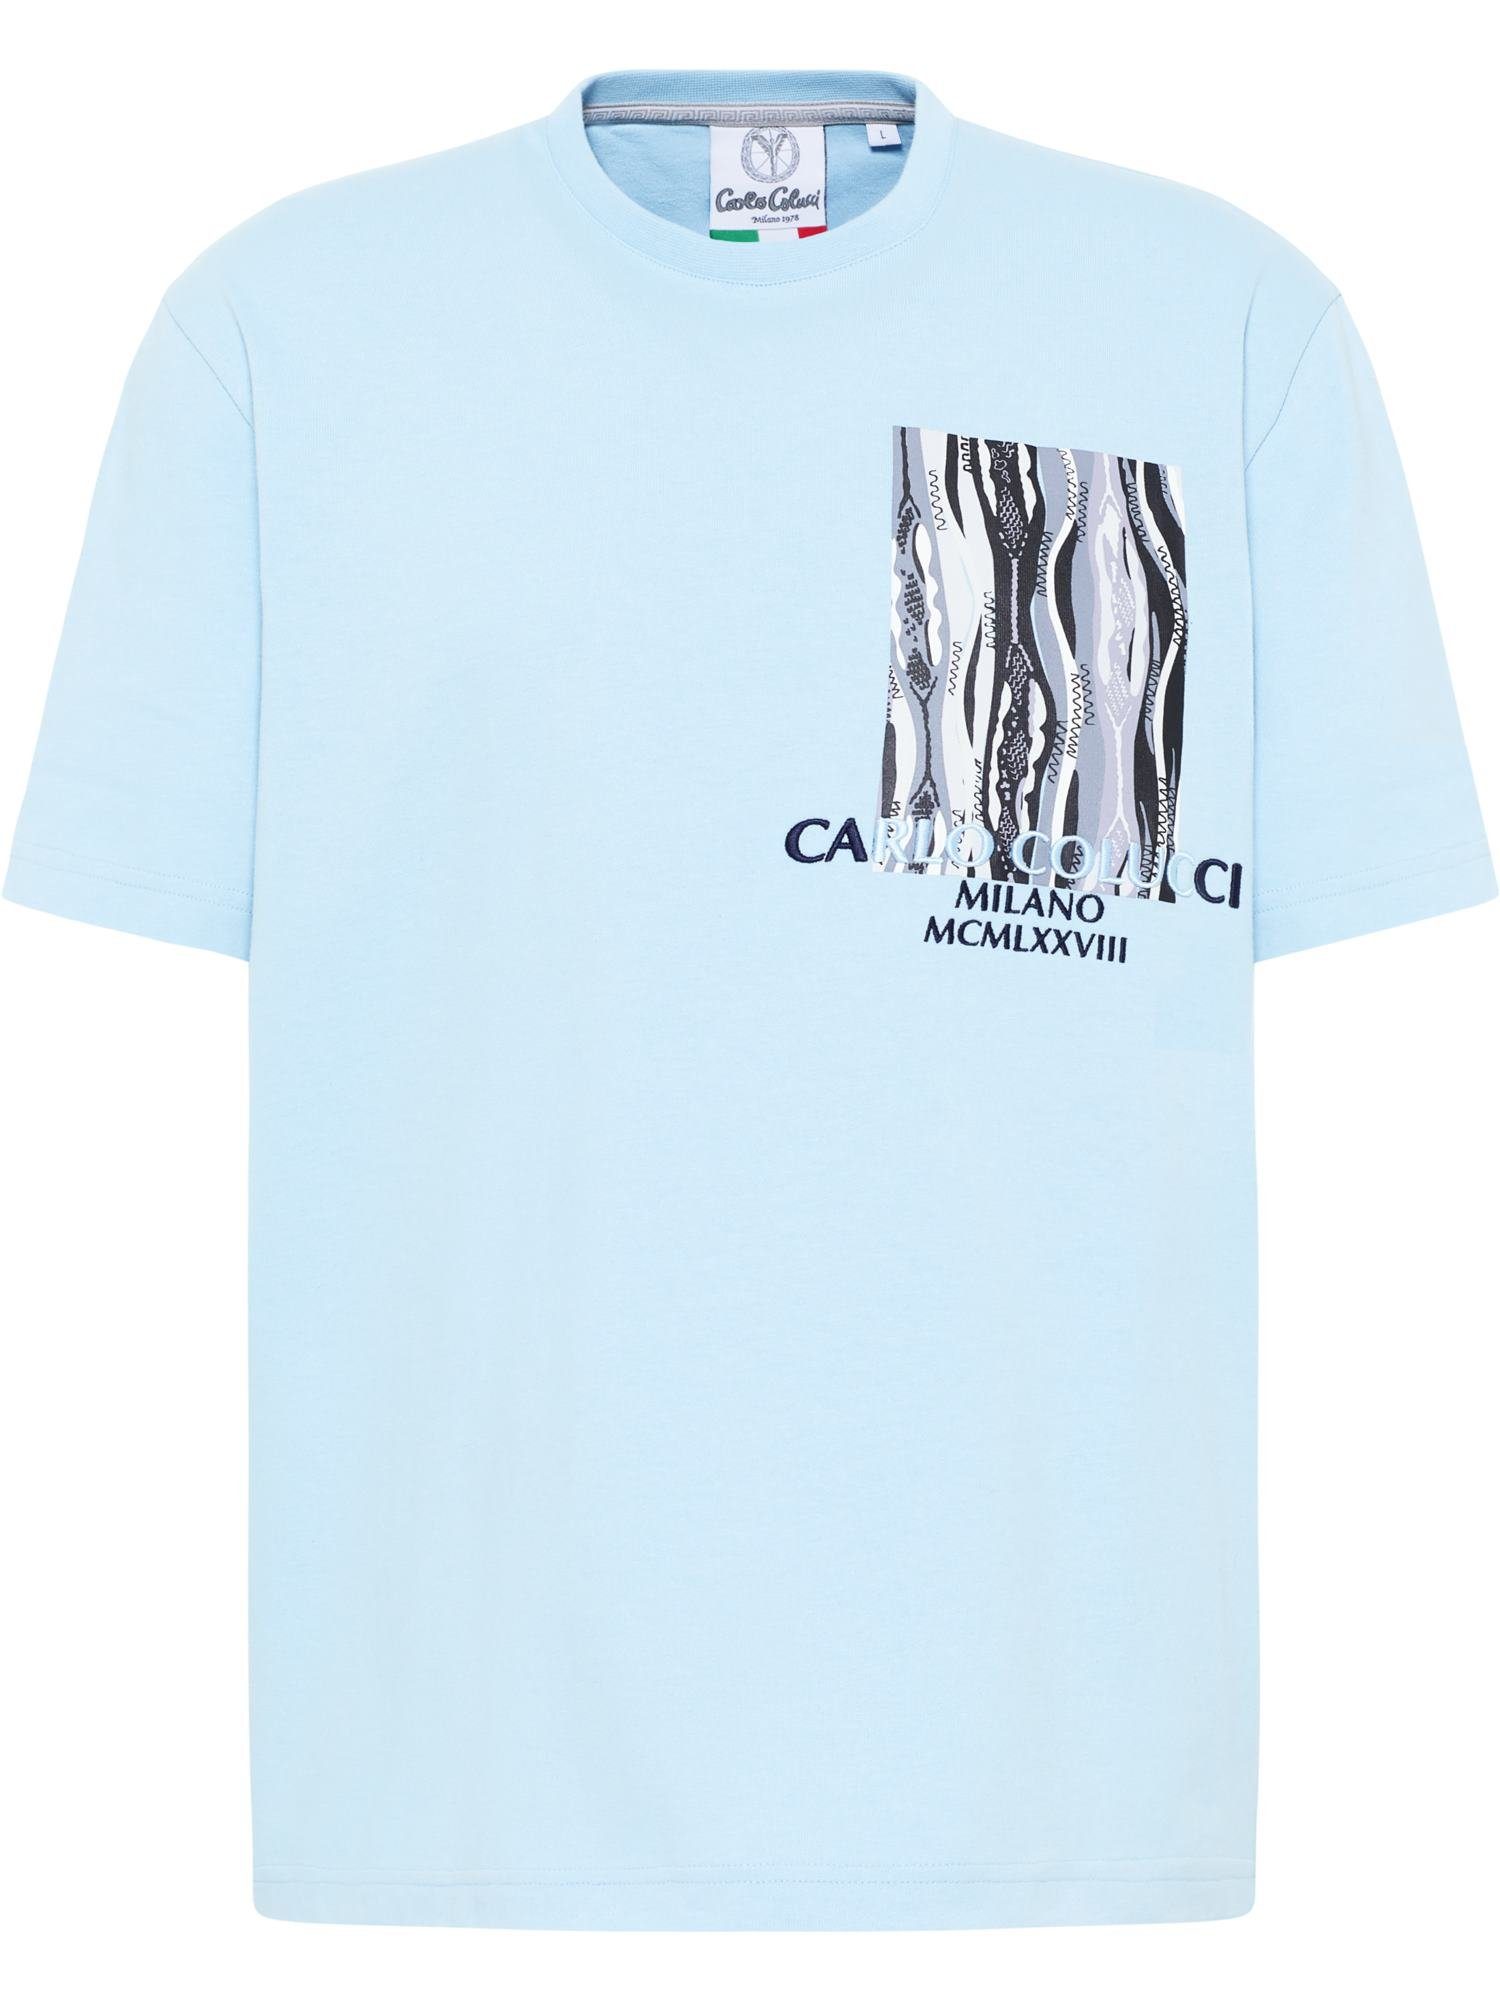 CARLO Pandis De COLUCCI T-Shirt Blau